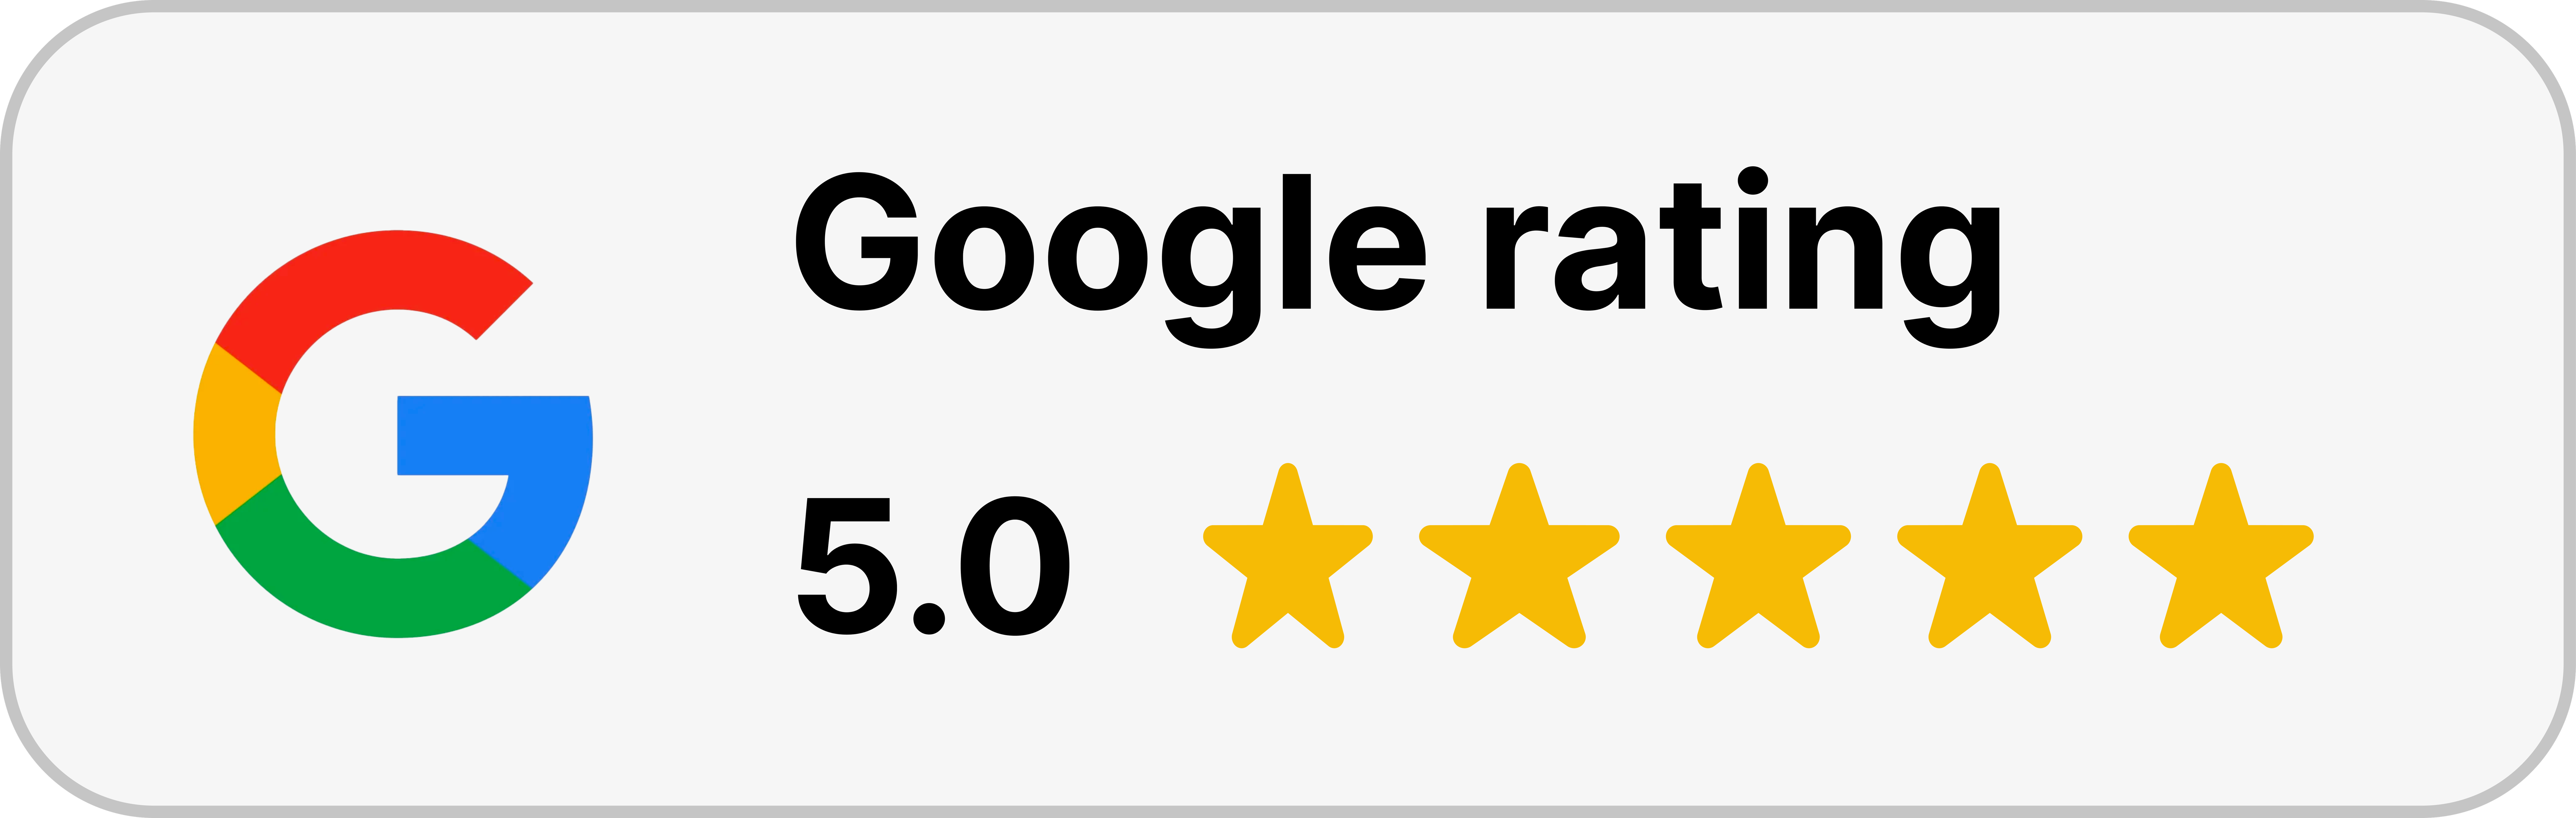 Google review white